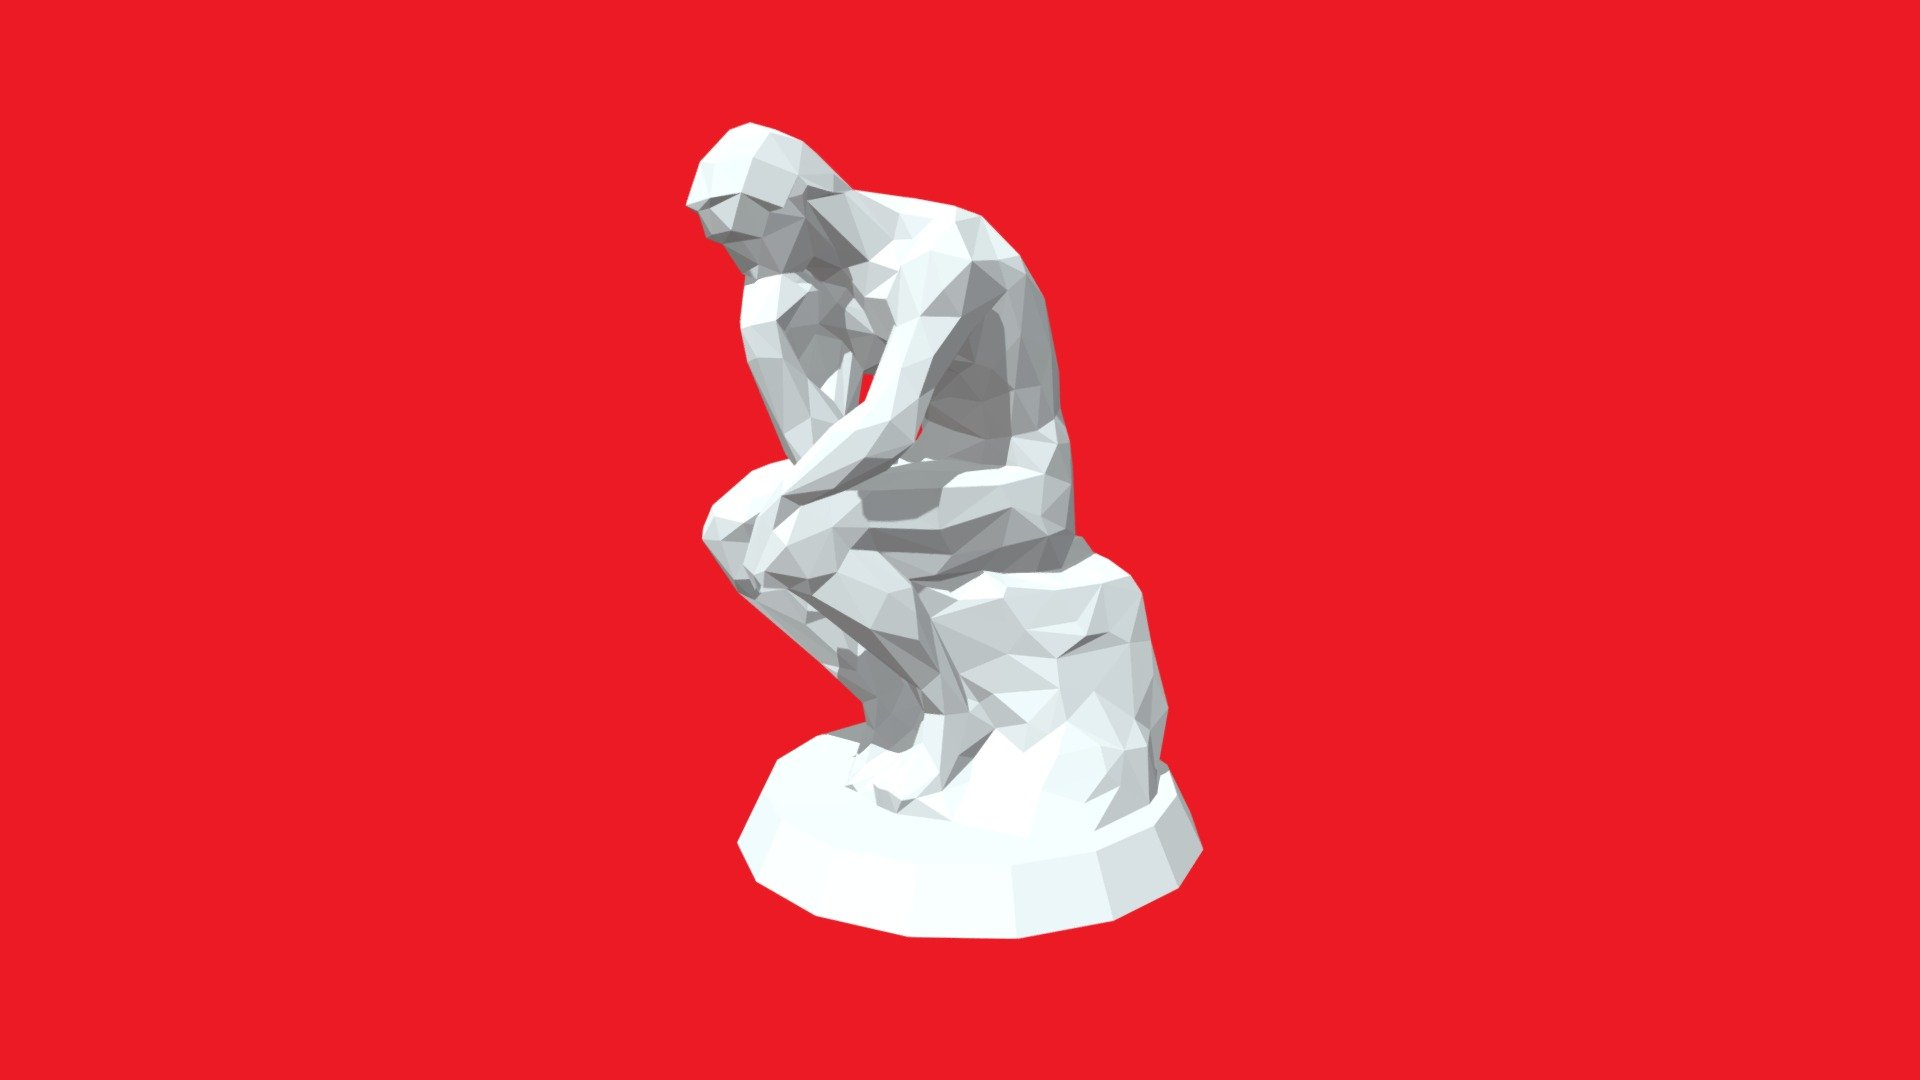 1920x1080 The Thinker Low Poly Stylized 3D model by Andrey Sannikov (@ritordp) [372a76d